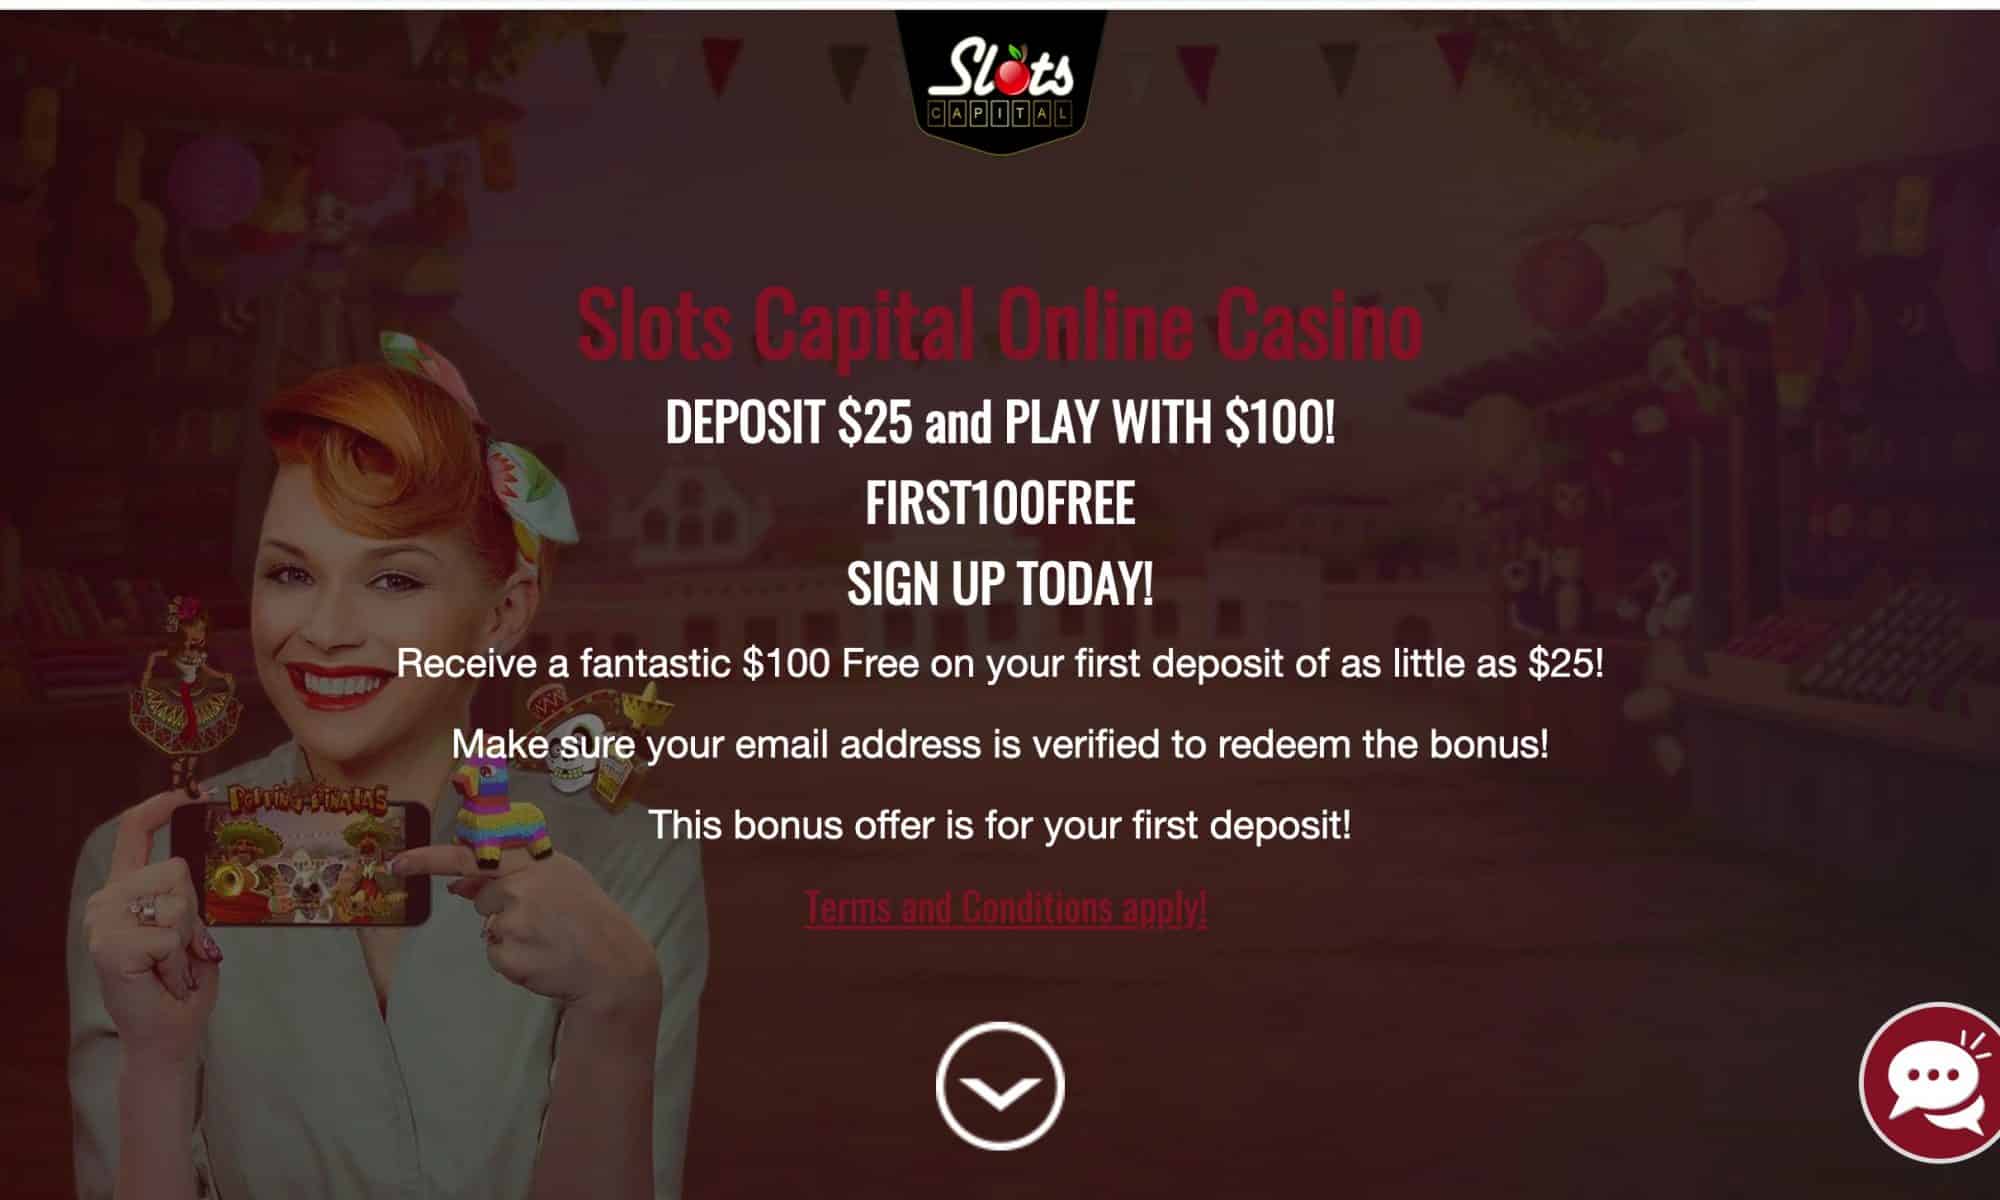 Slots Capital Casino - Receive a $100 bonus offer FREE!